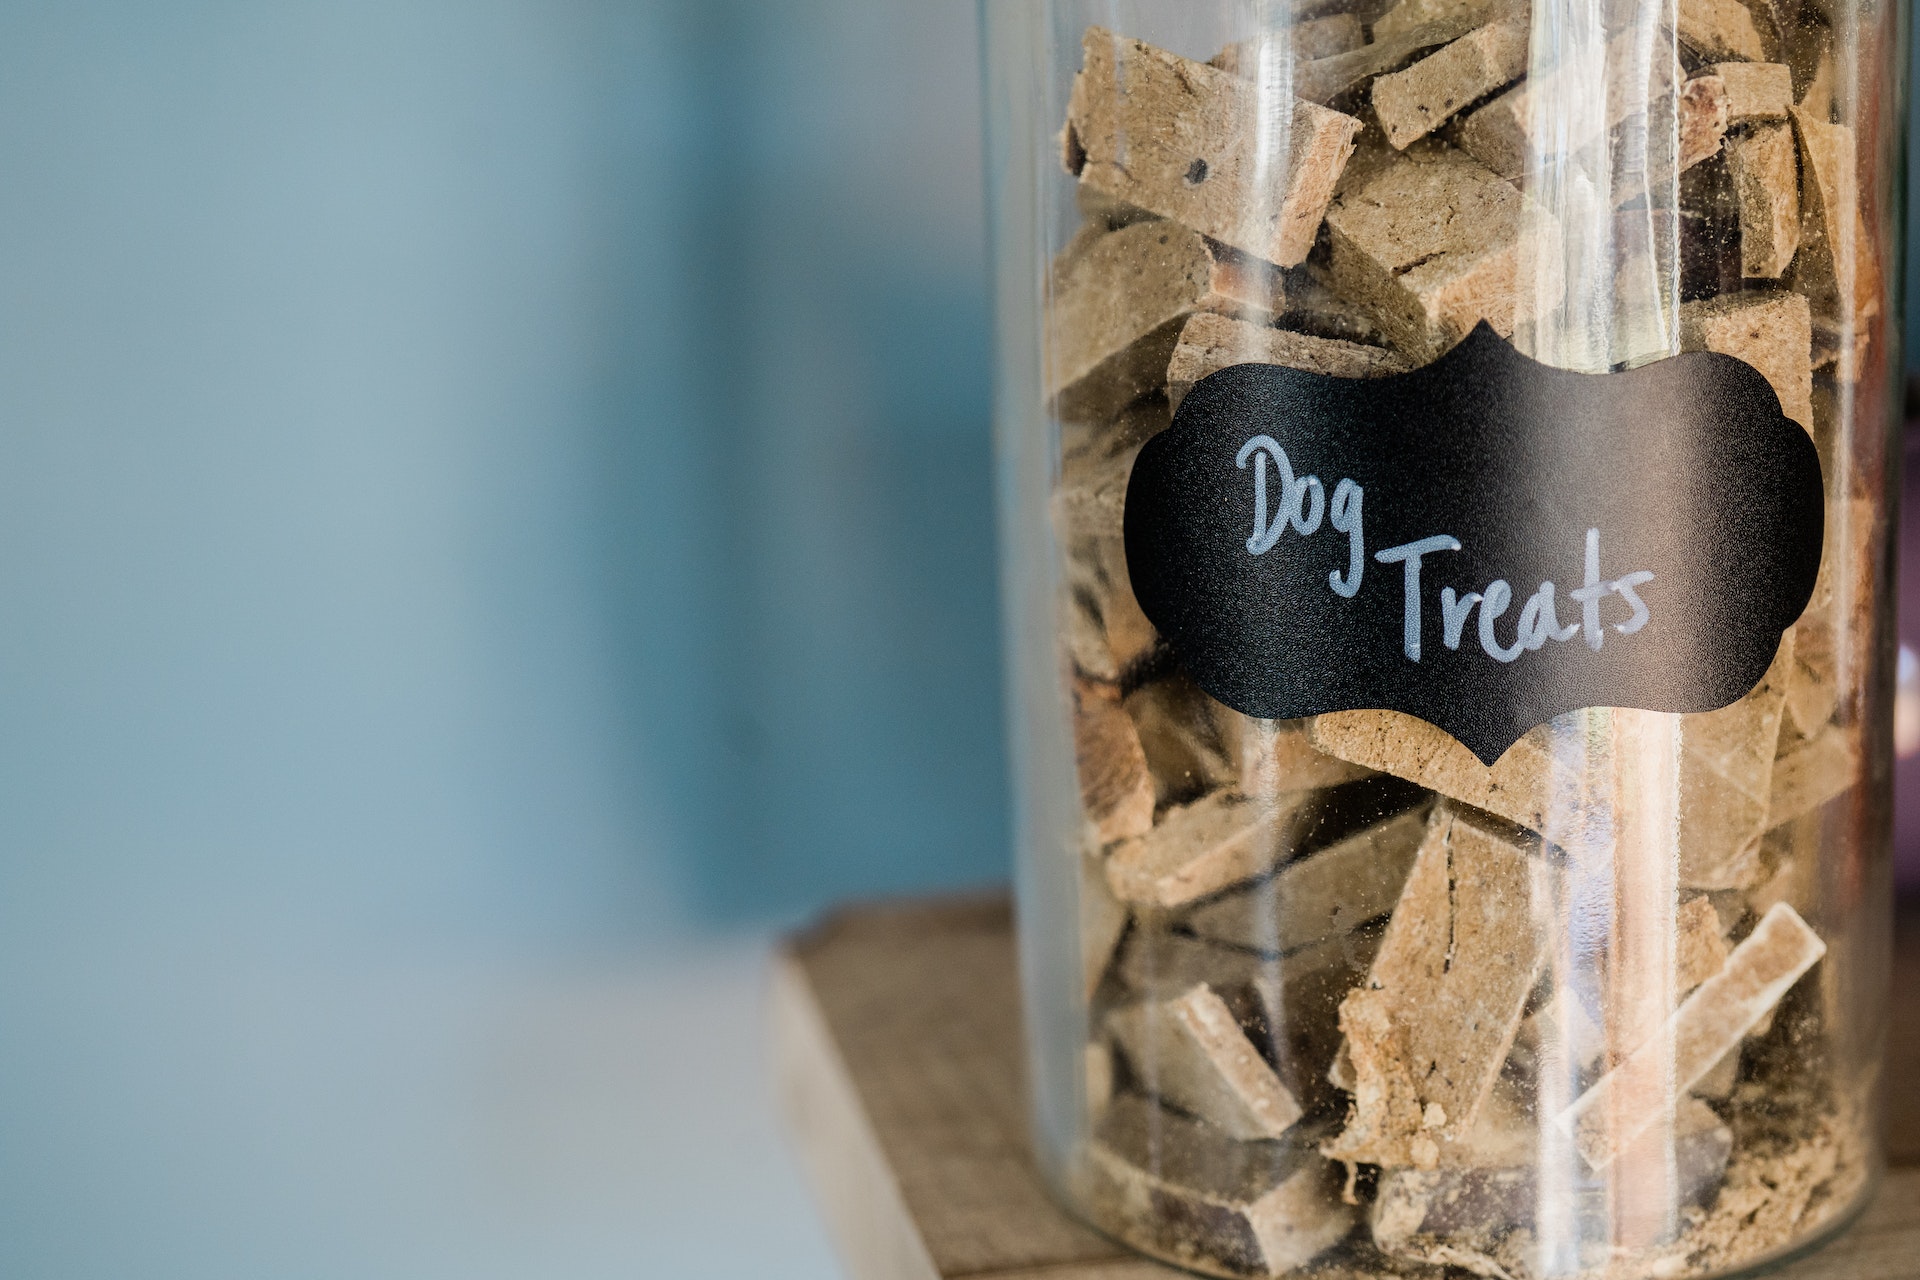 A close-up photo of a glass jar of dog treats.